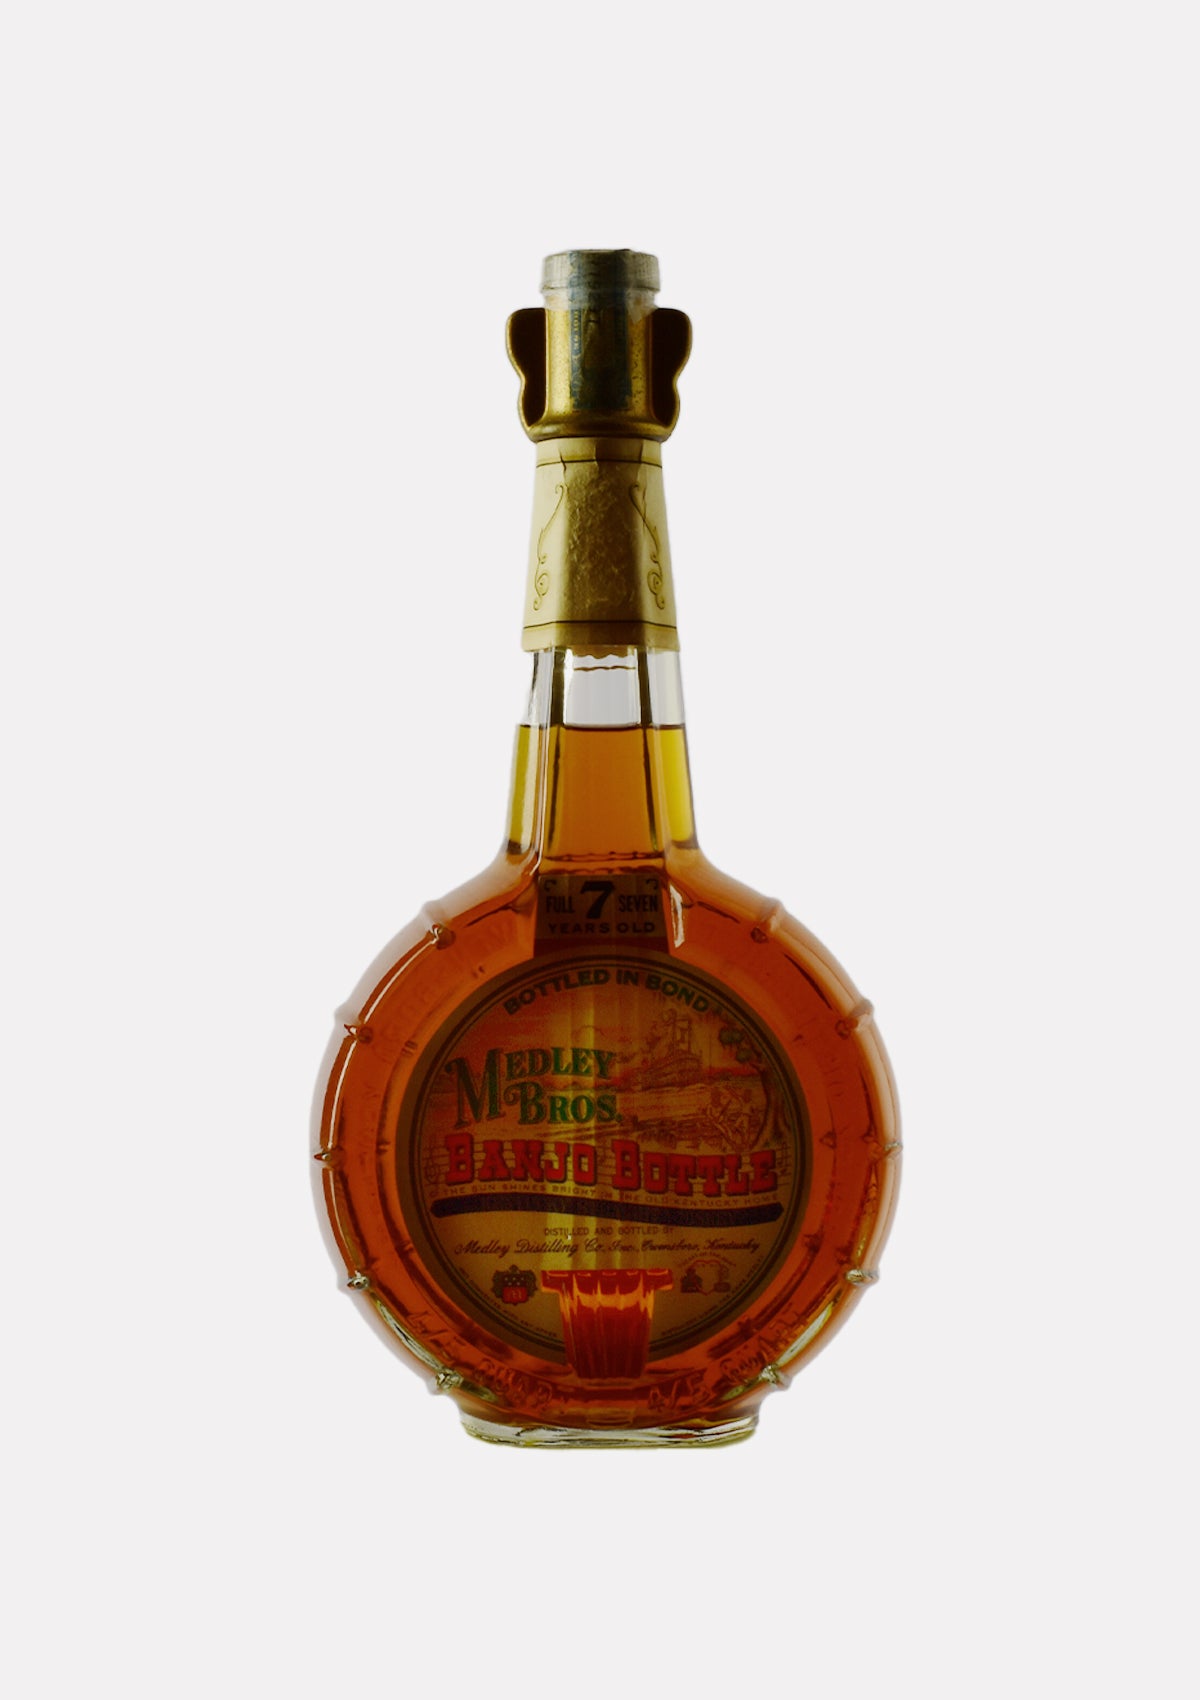 Medley Bros. Banjo Bottle Kentucky Straight Bourbon Whiskey 7 Jahre